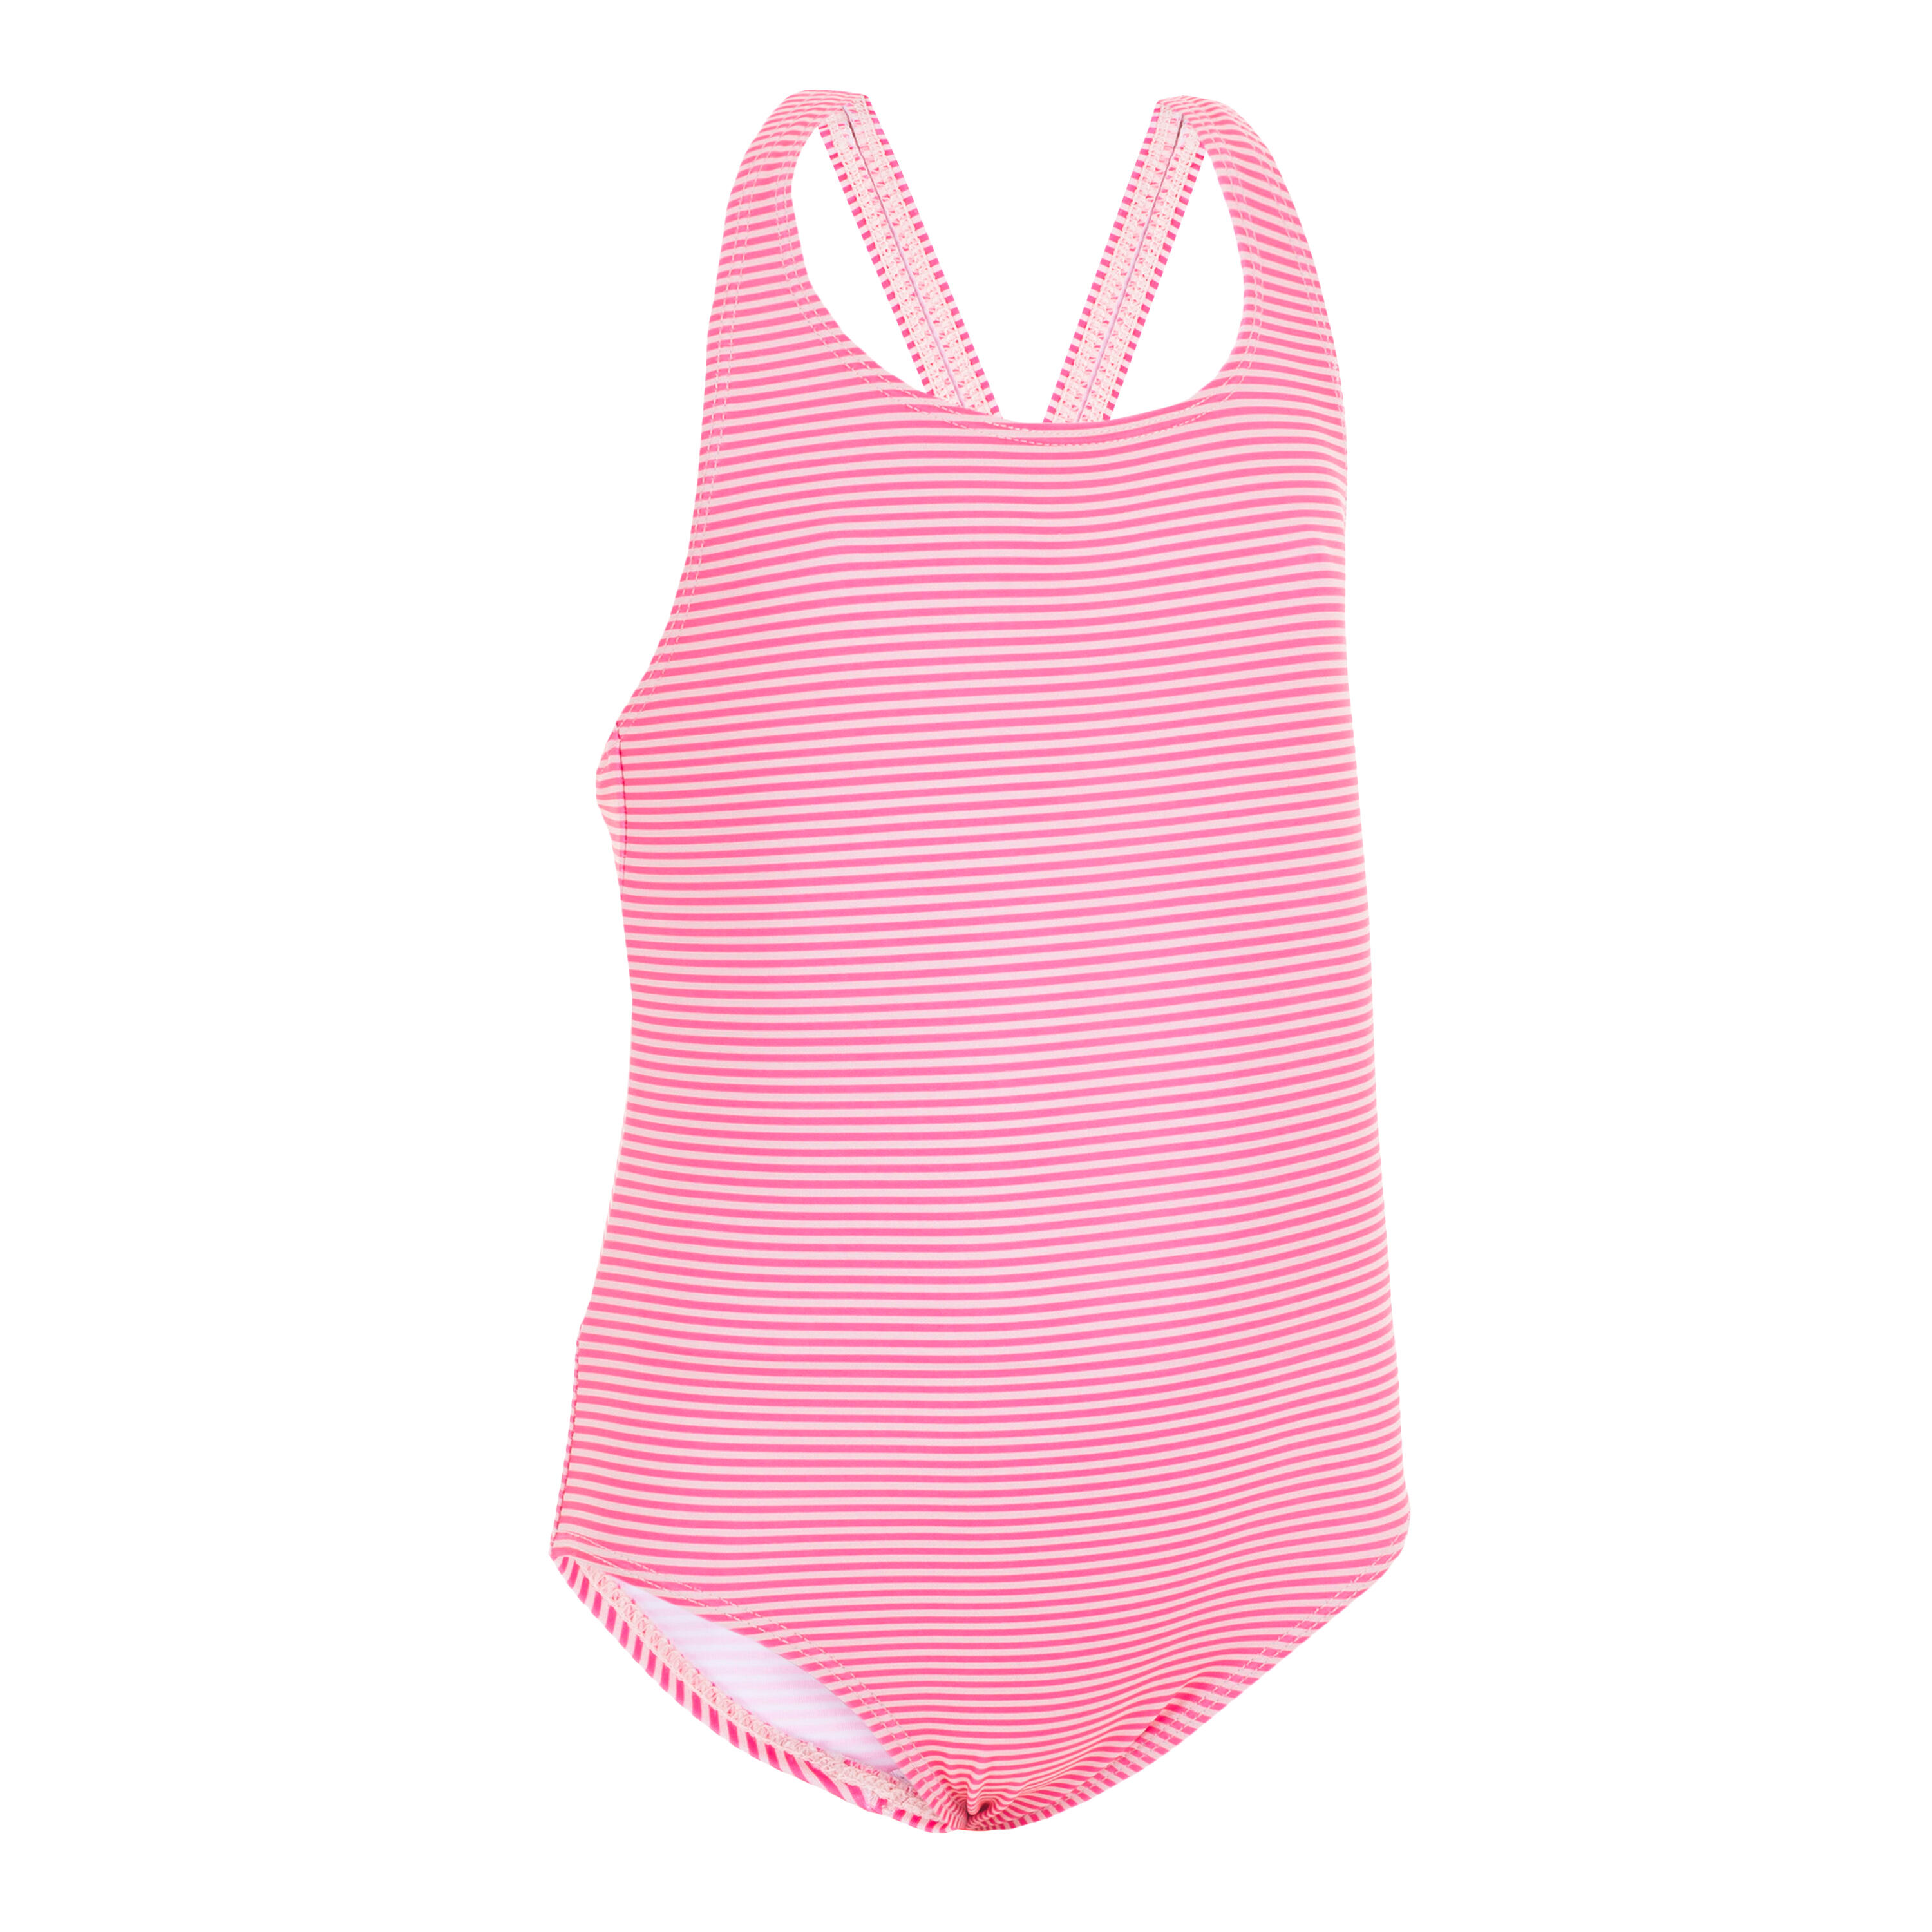 NABAIJI Baby Girls' 1-Piece Swimsuit - Pink Stripes Print